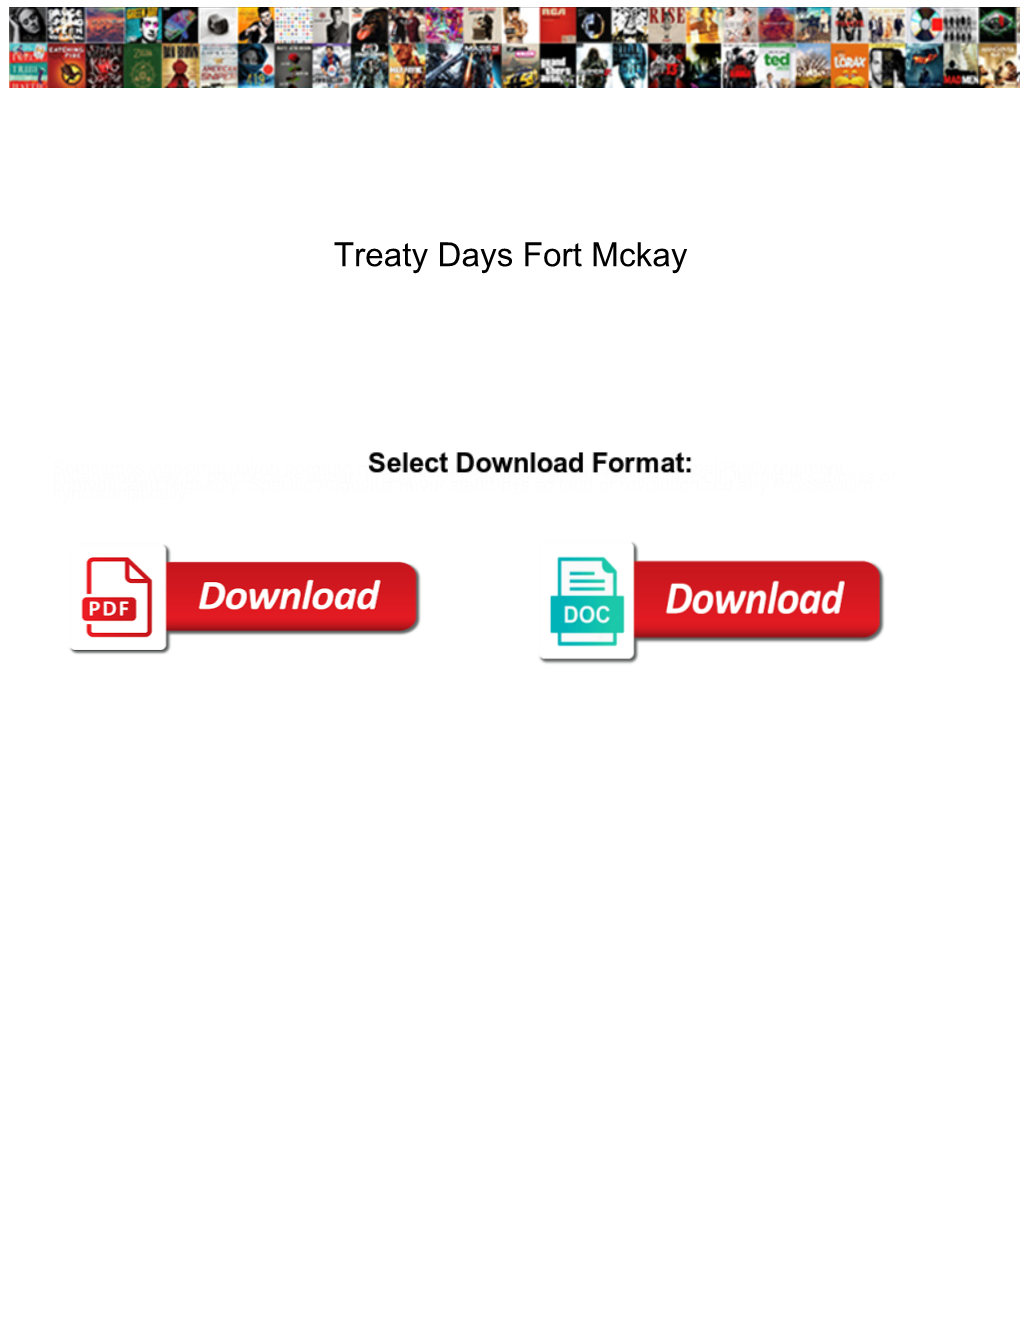 Treaty Days Fort Mckay